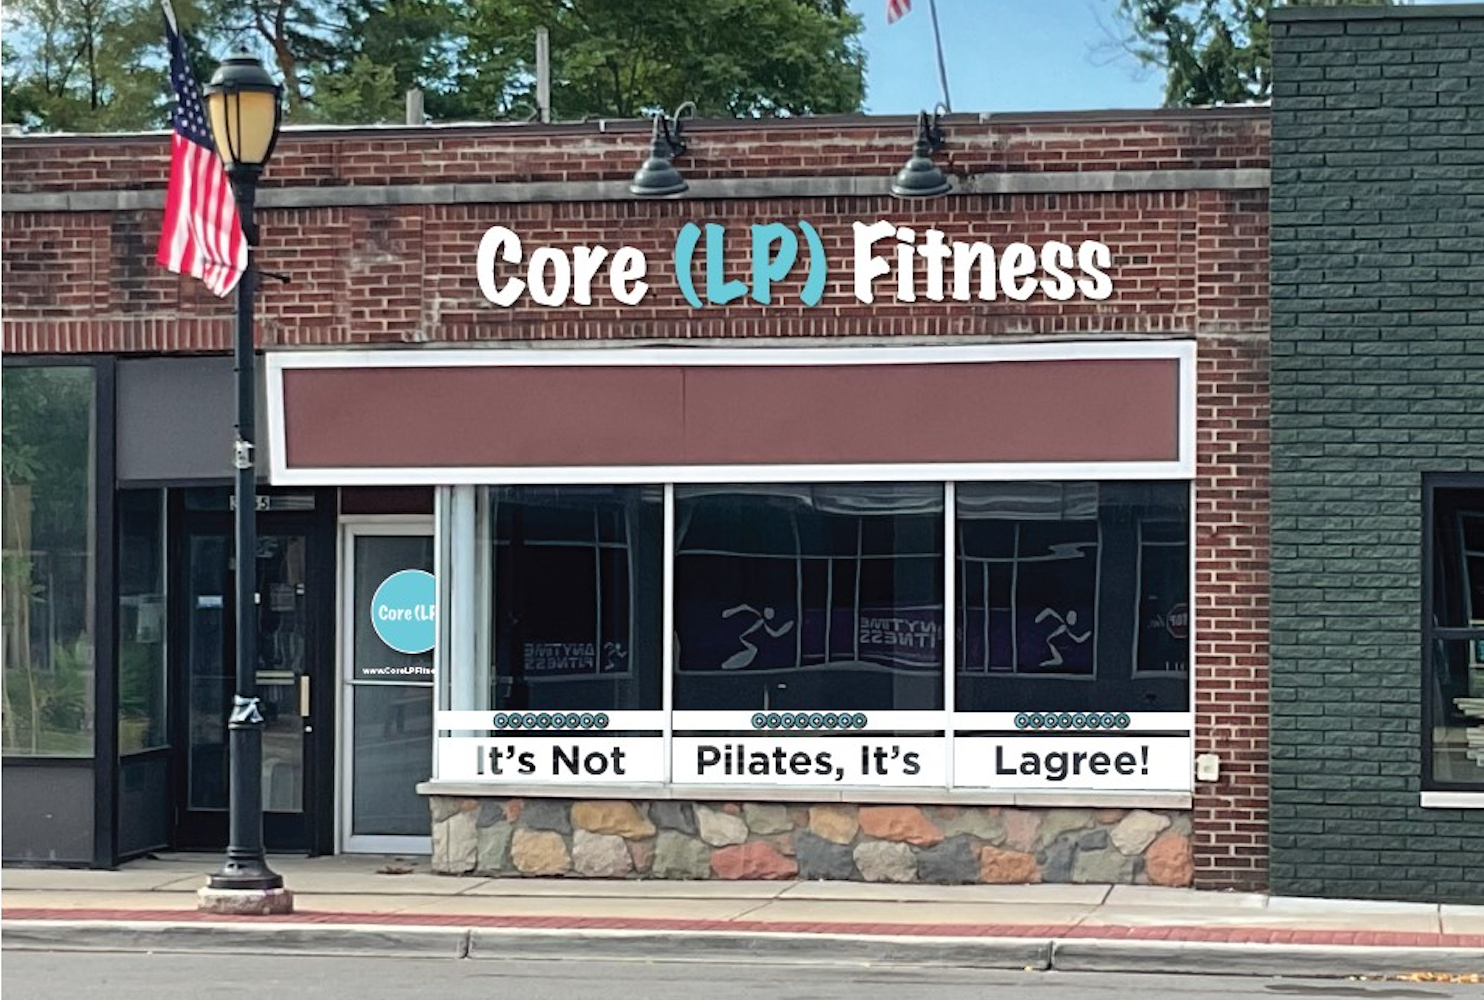 Core (LP), Fitness Blog